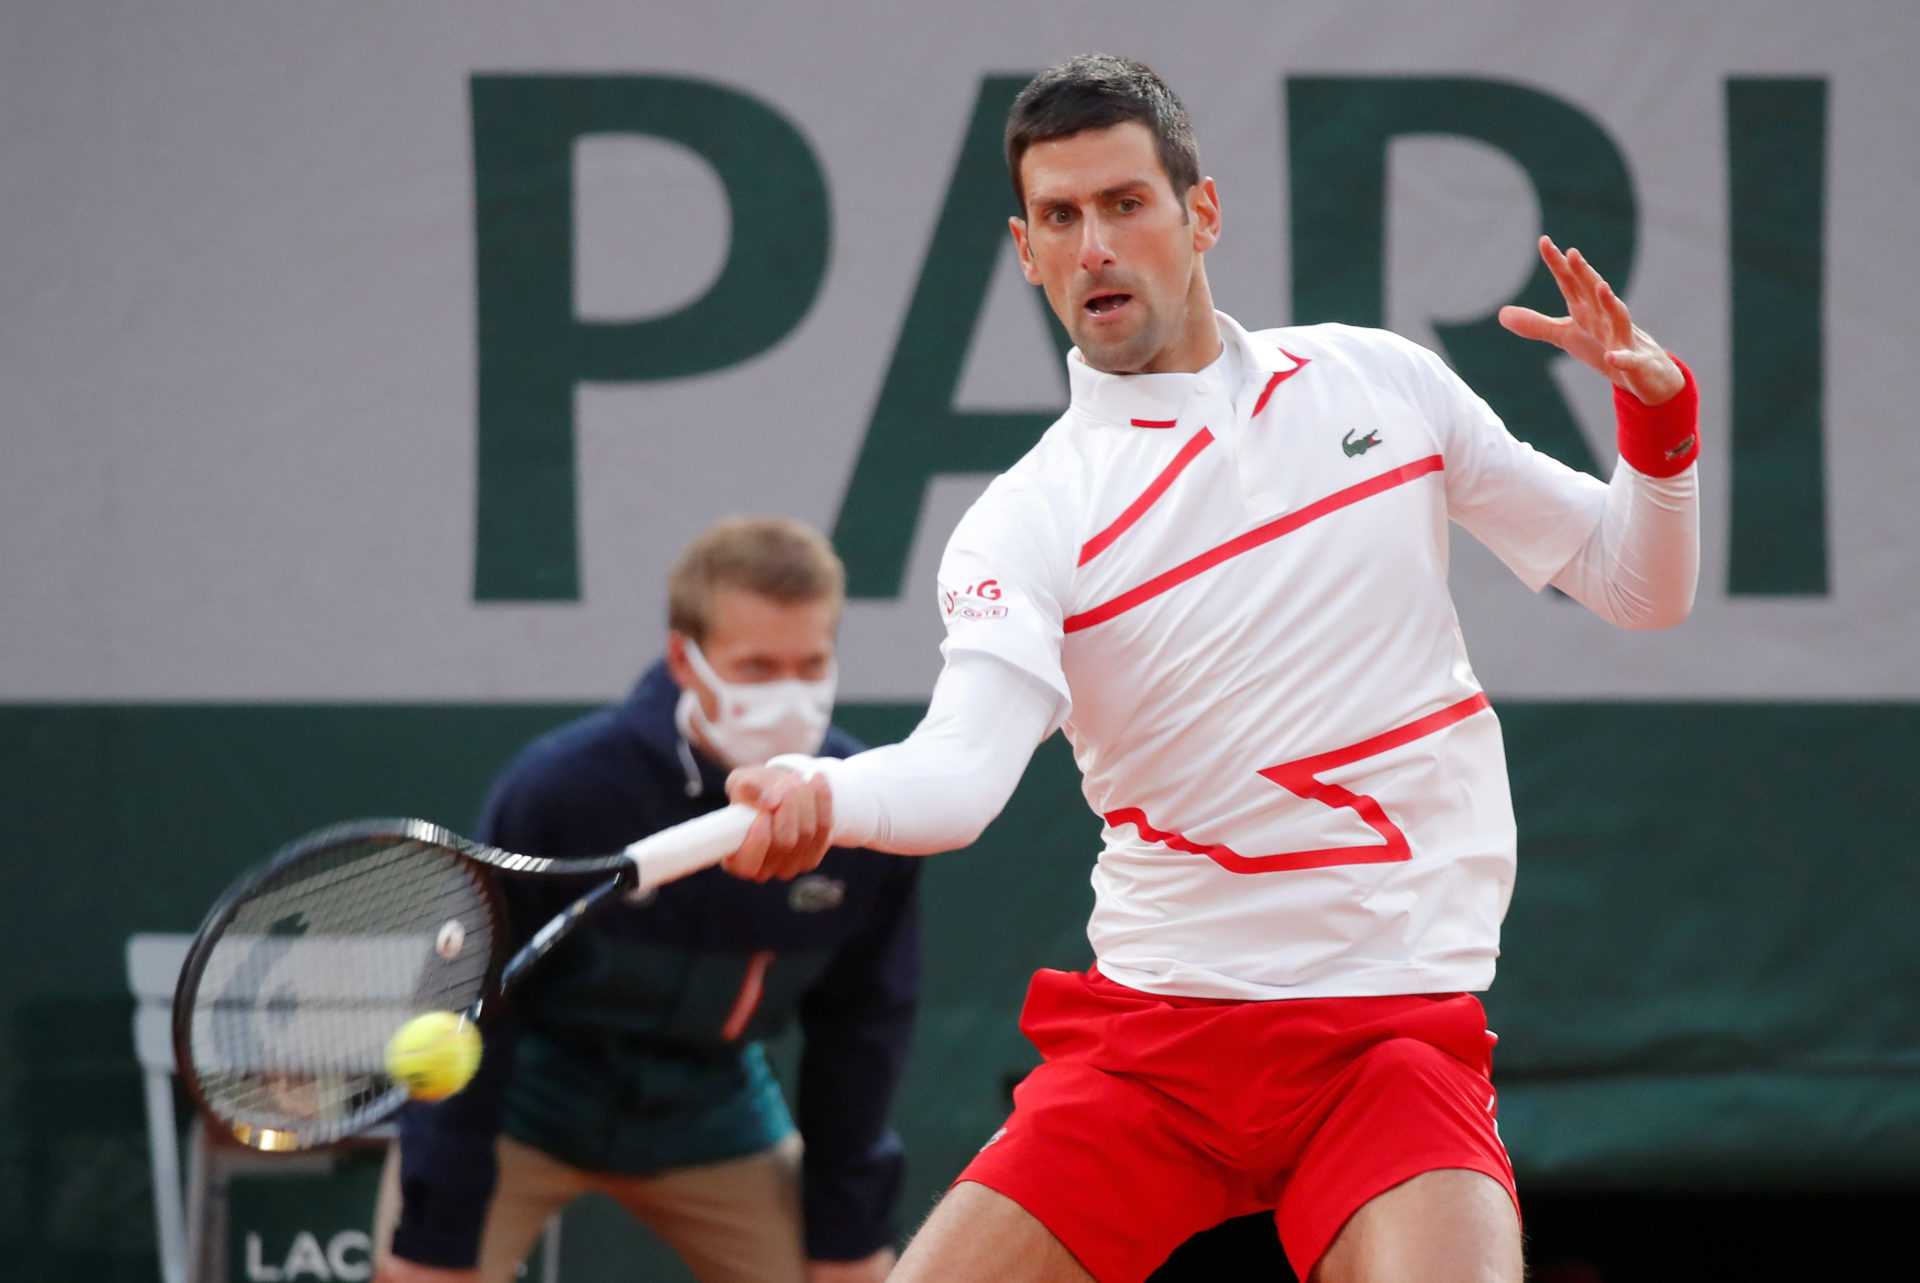 Novak Djokovic en action lors de l'Open de France 2020